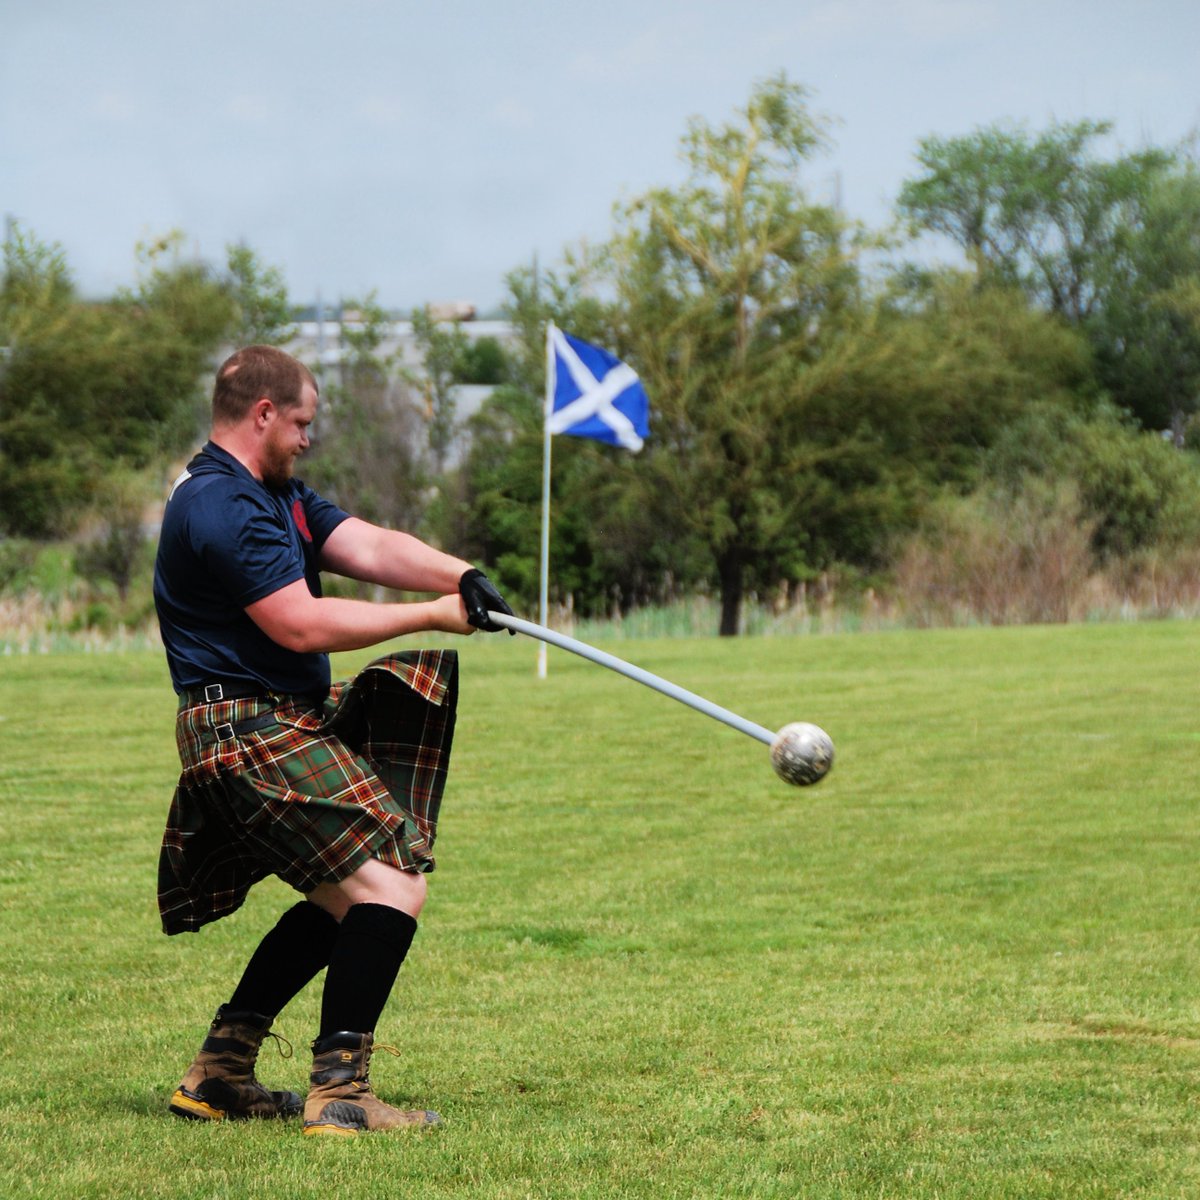 In the May #ScottishBanner:
Five reasons to visit the #MonctonHighlandGames
@Moncton_Scots 
Issue out now!
scottishbanner.com/?p=191995
#TheBanner  #Moncton #HighlandGames #ScotSpirit #LoveHighlandGames #MonctonScots #ScottishCanadian #ScottishFestival #GatherTheClan #GetYourKiltOn